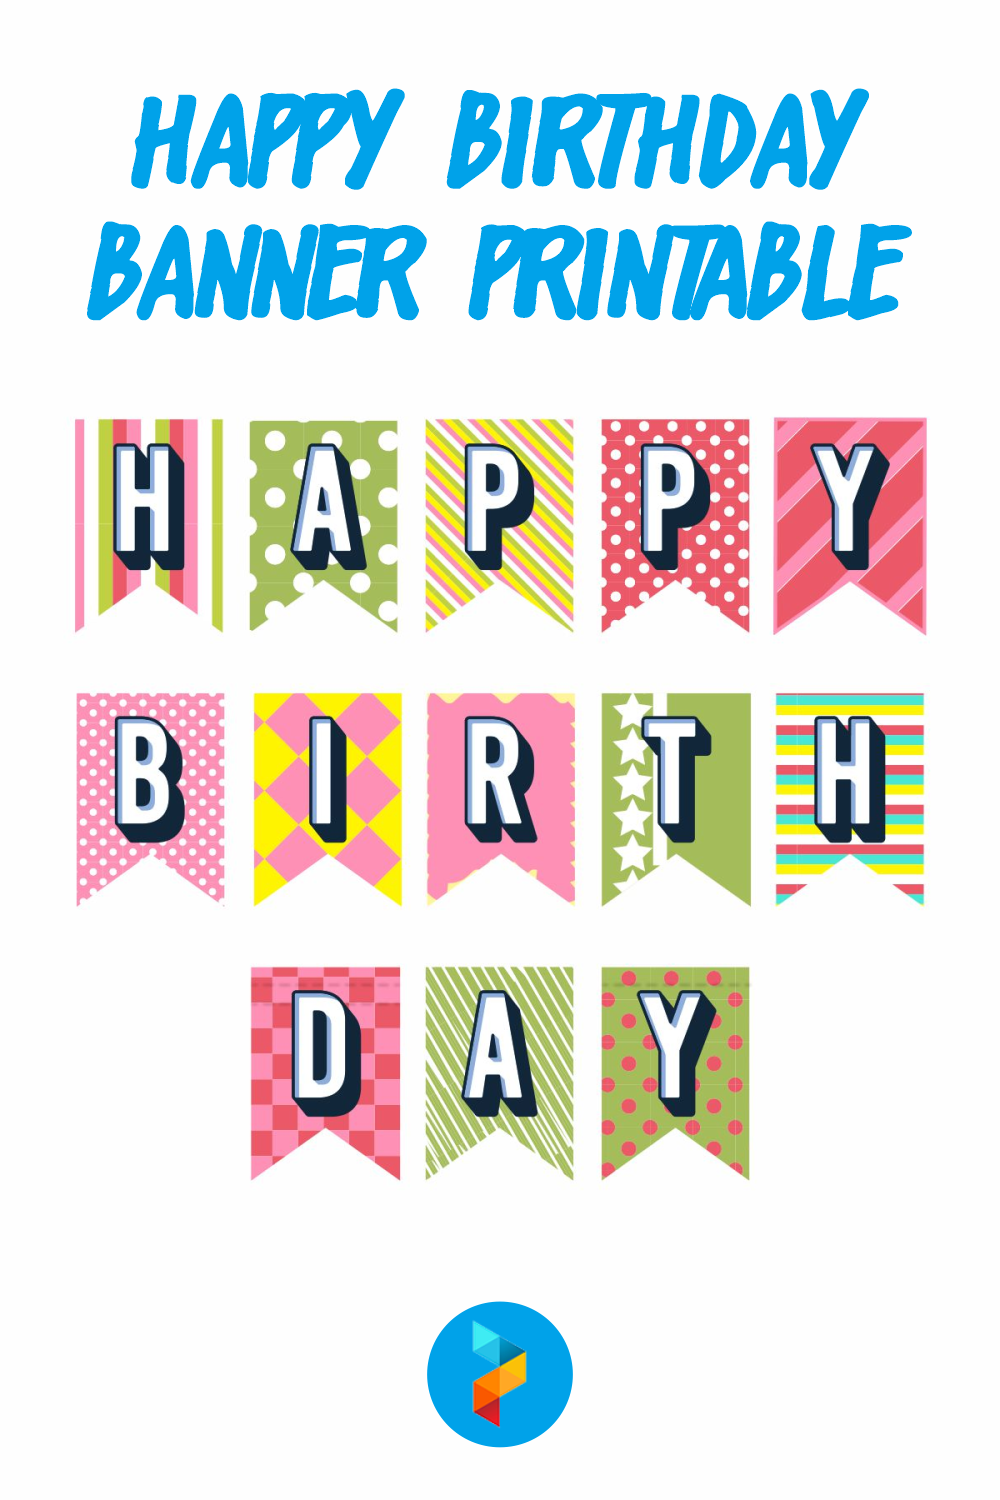 10 Best Happy Birthday Banner Printable